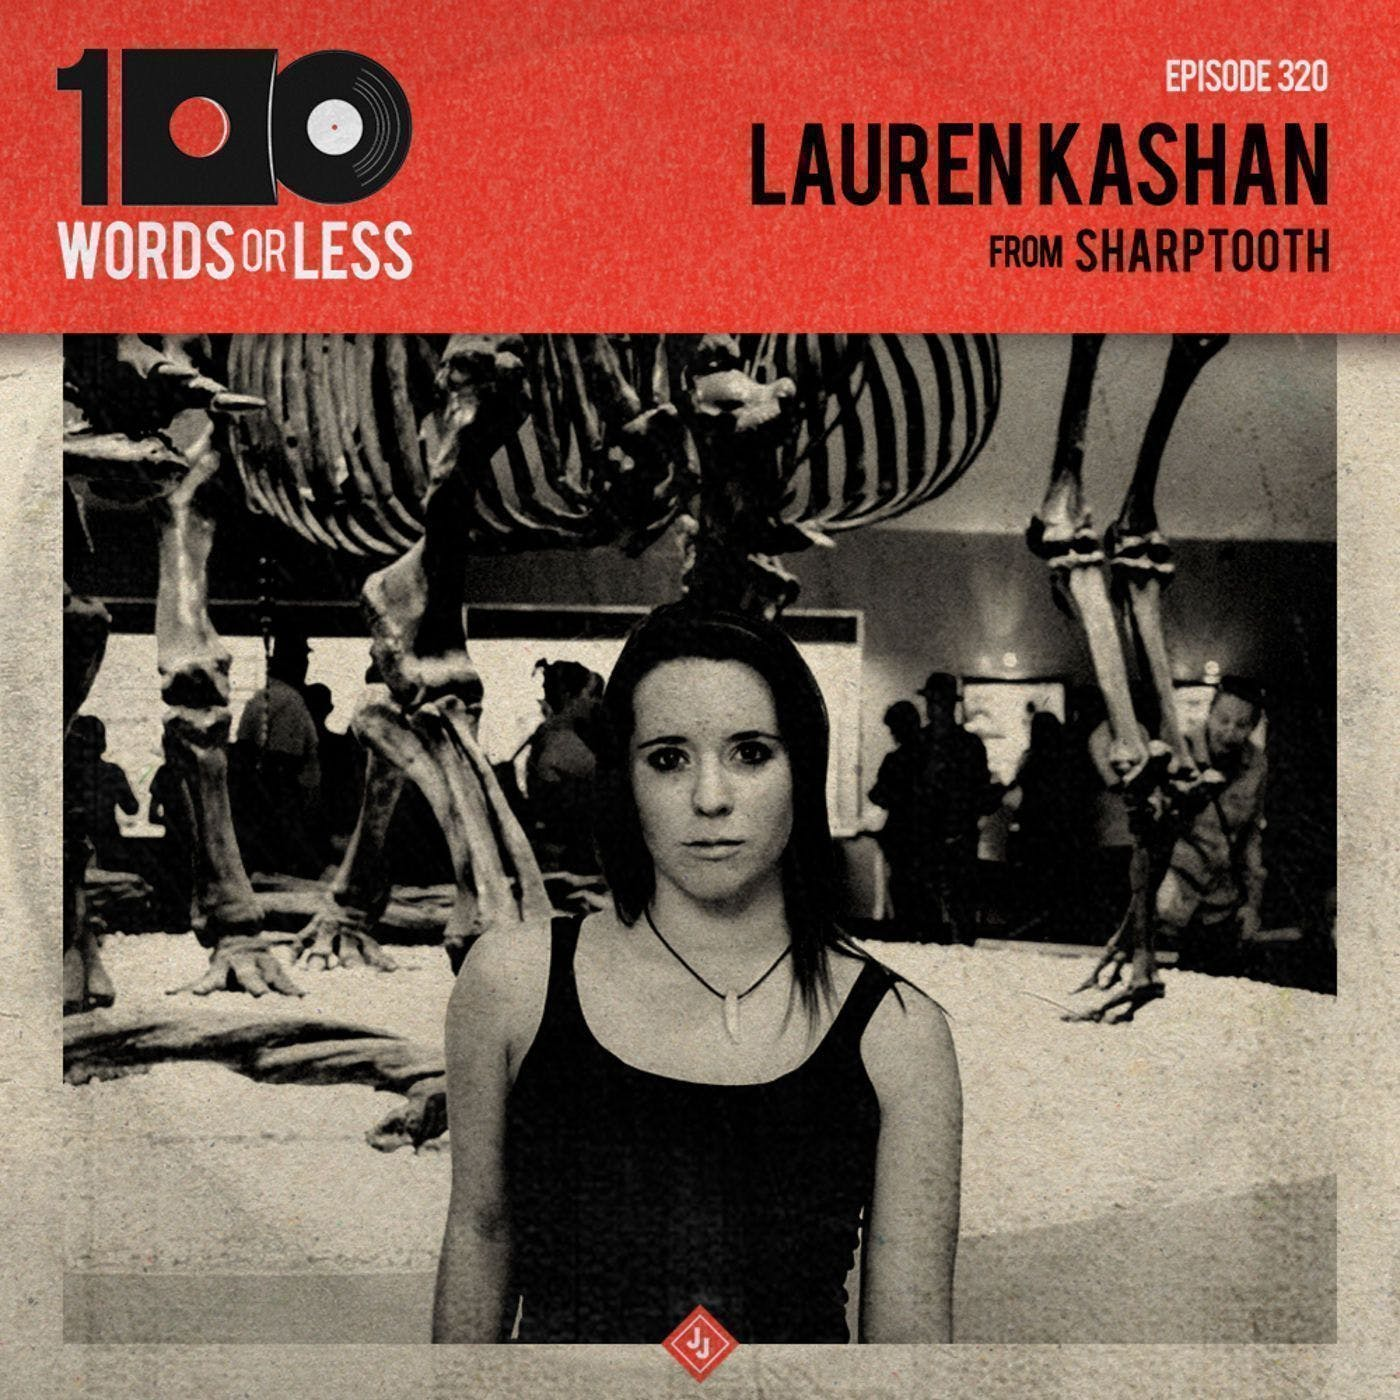 Lauren Kashan from Sharptooth